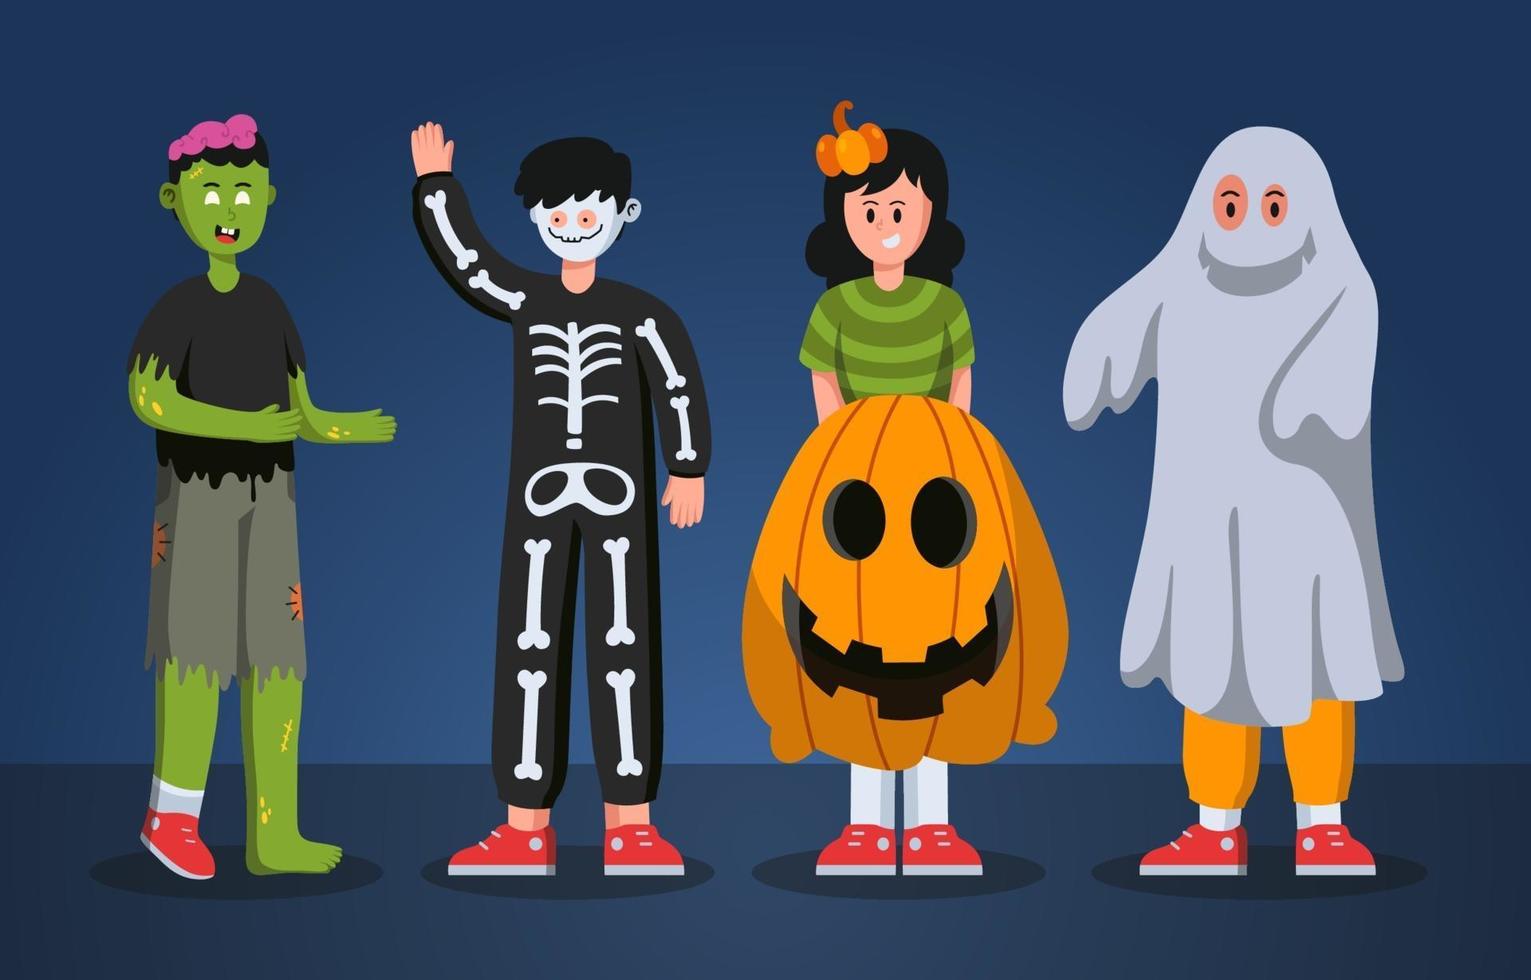 Costume Party on Halloween Celebration vector